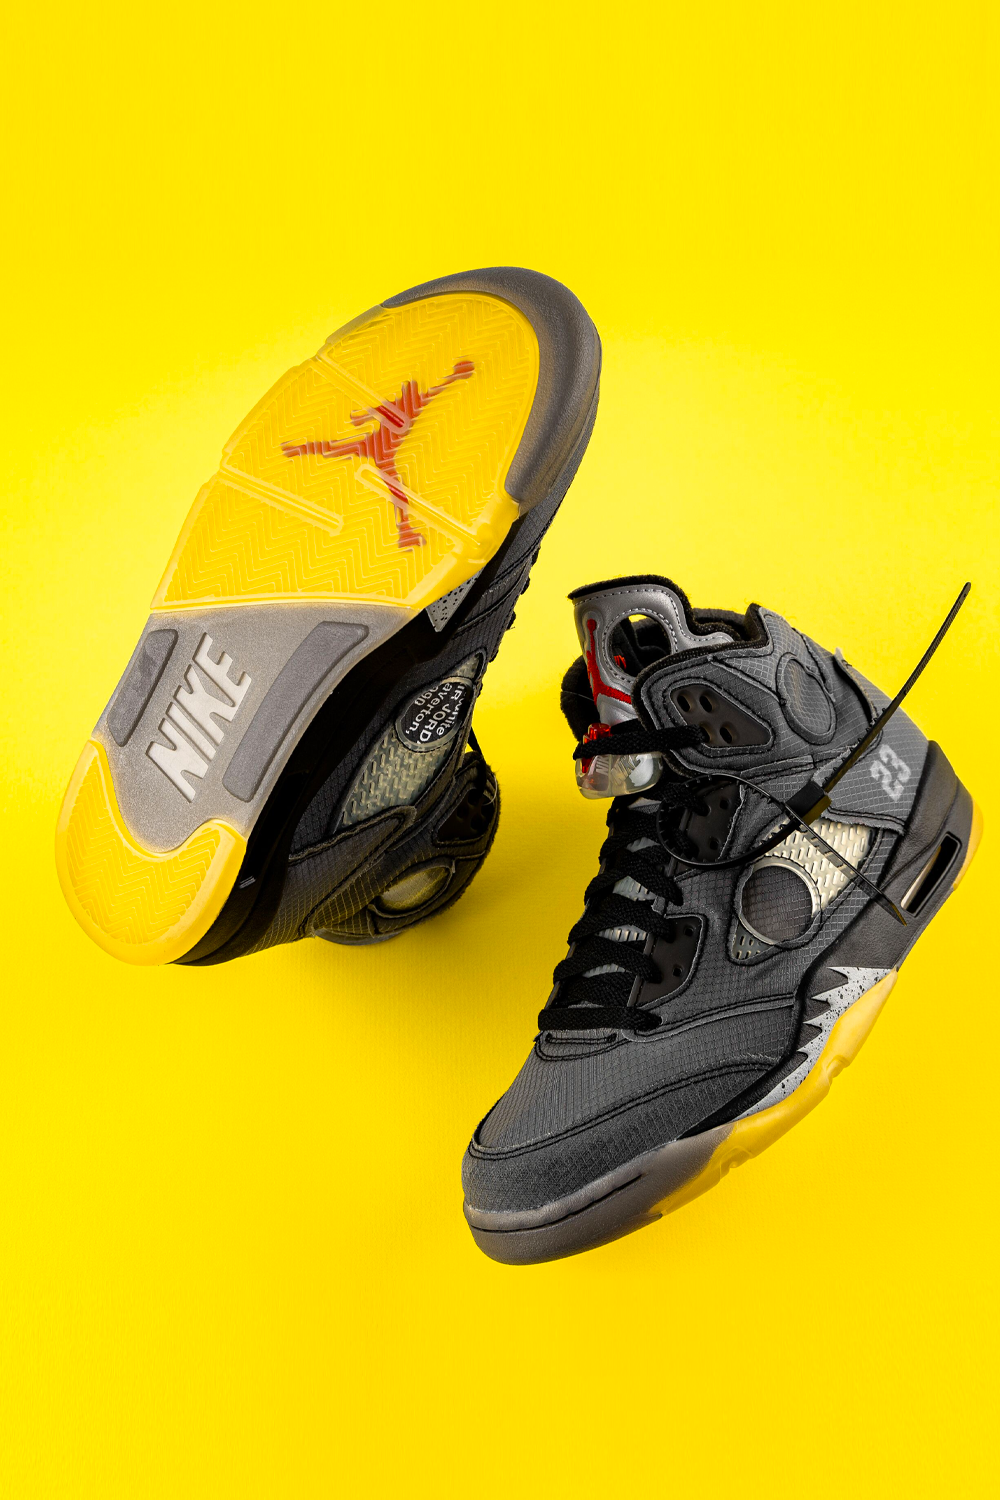 Air Jordan 5 Retro SP Off White 001. Hype Shoes, Sneakers Men Fashion, Sneakers Fashion